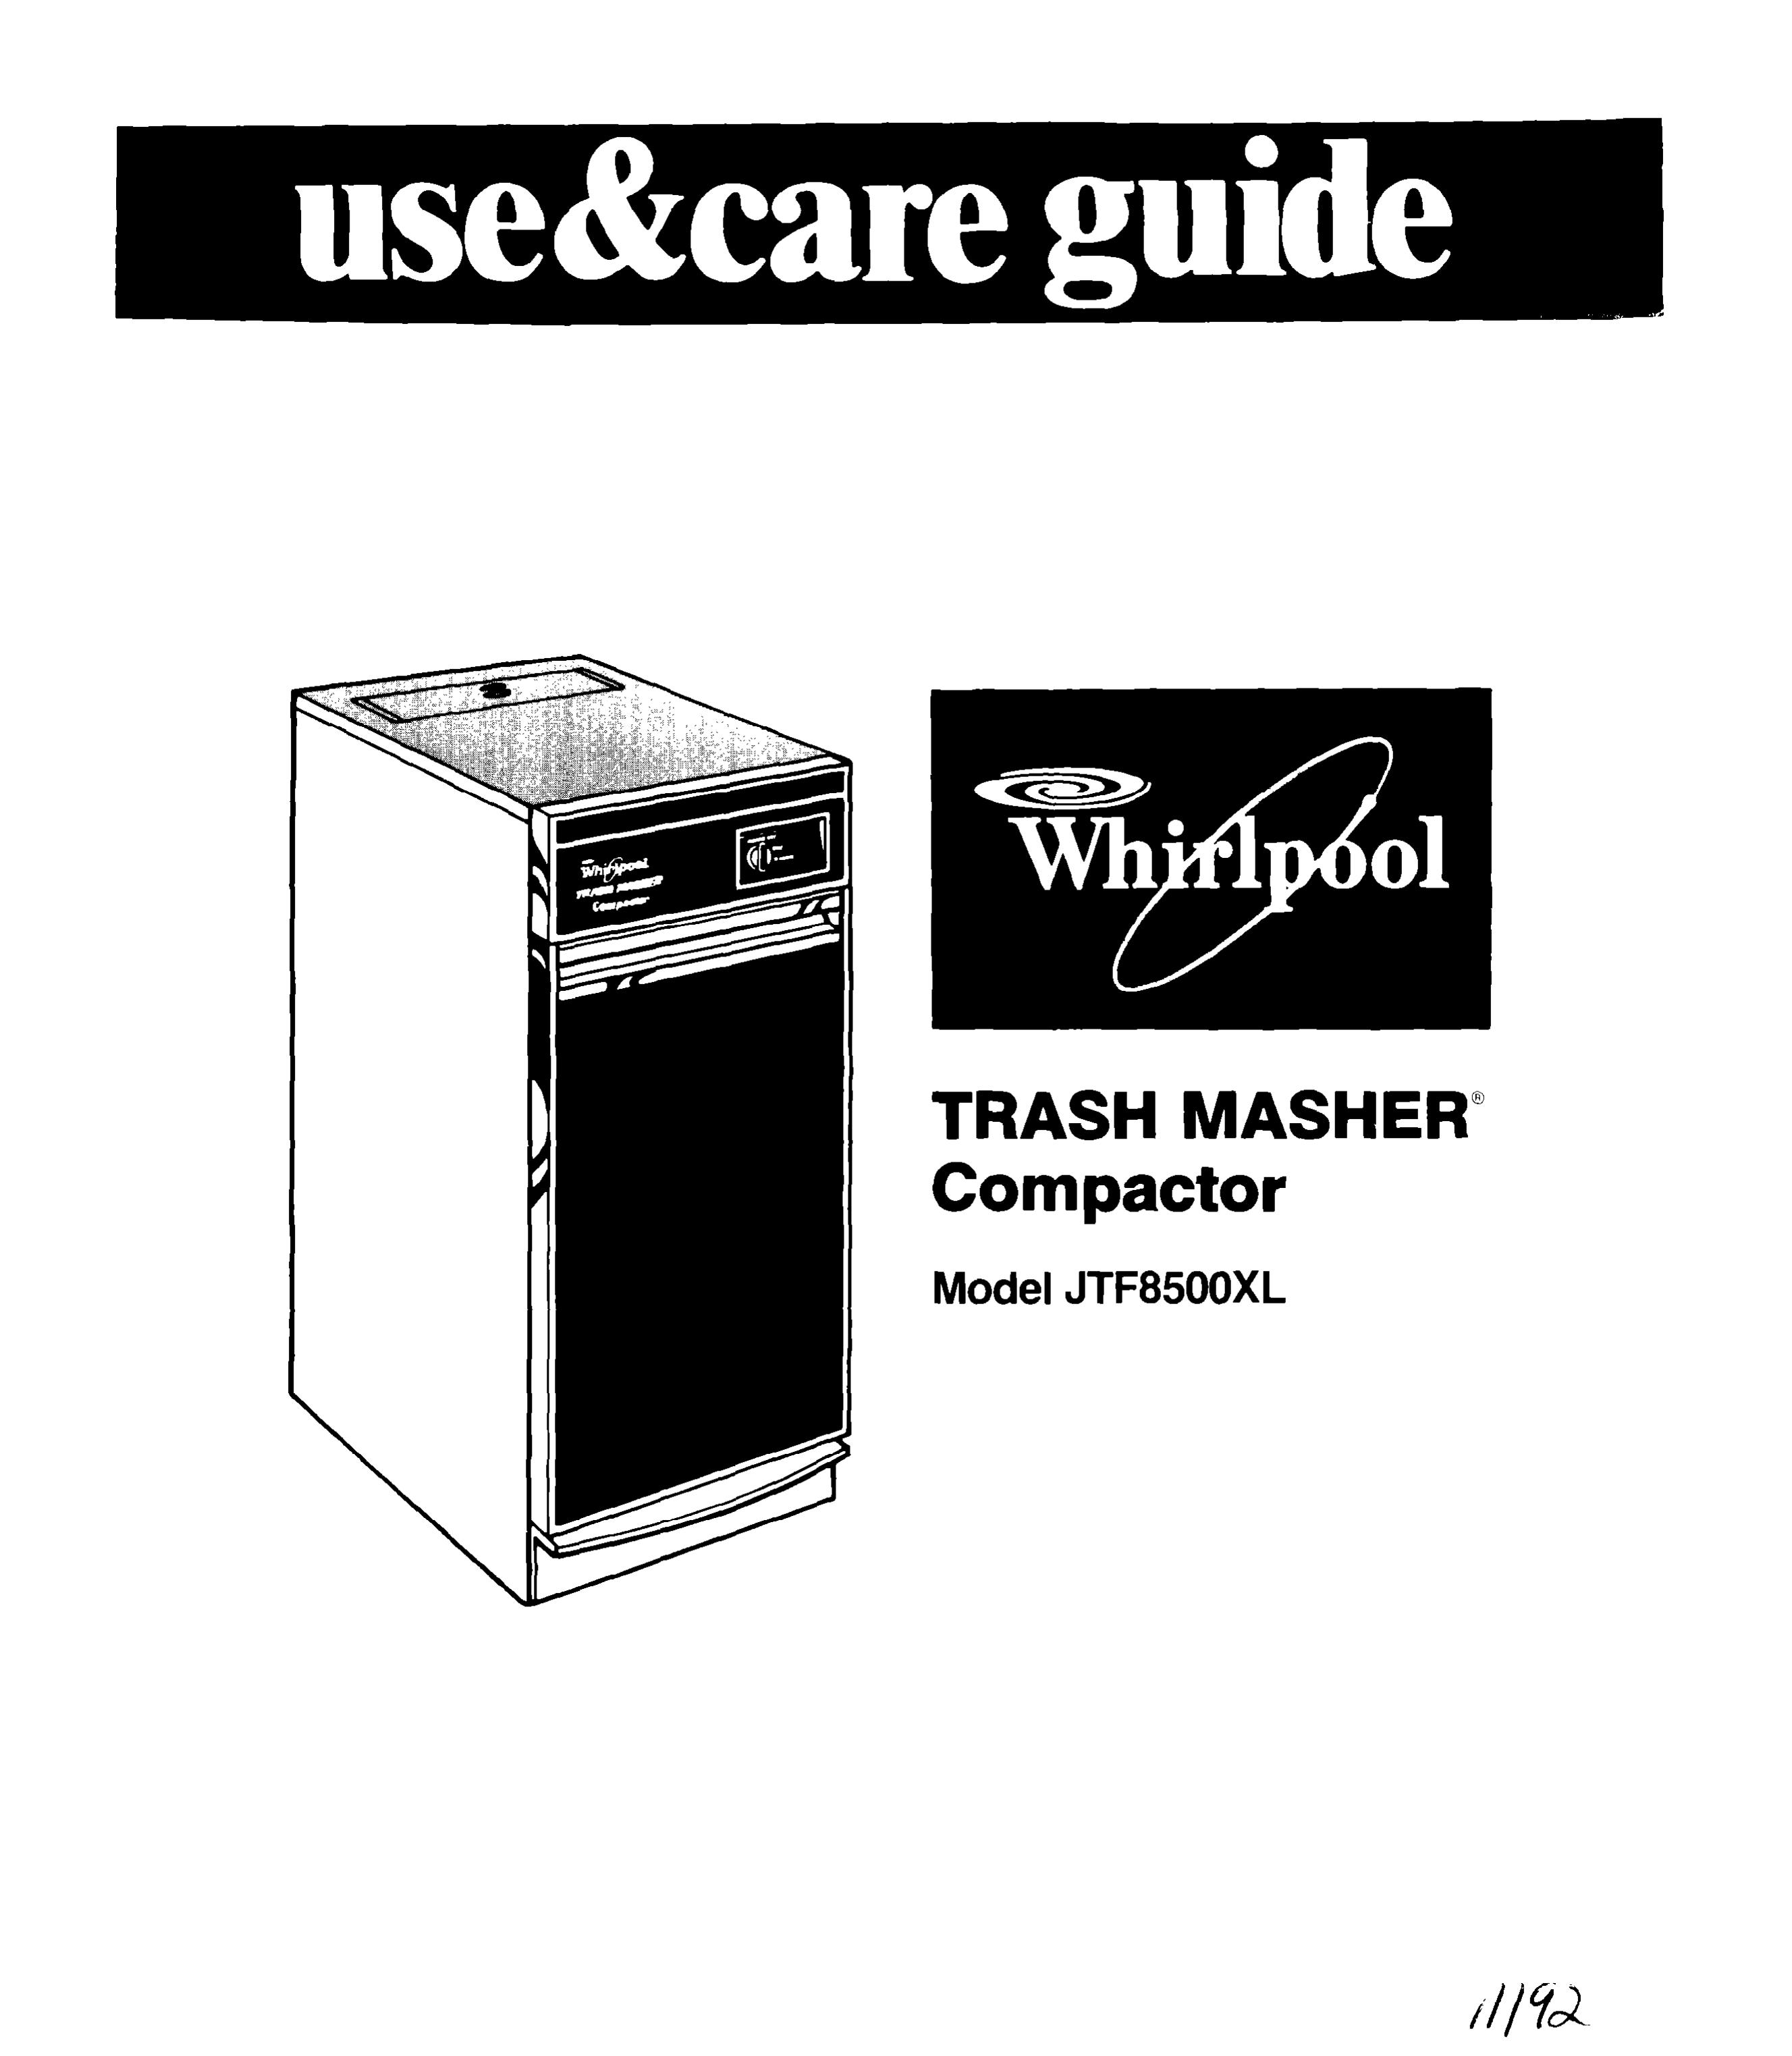 Whirlpool TRASH MASHER Trash Compactor User Manual